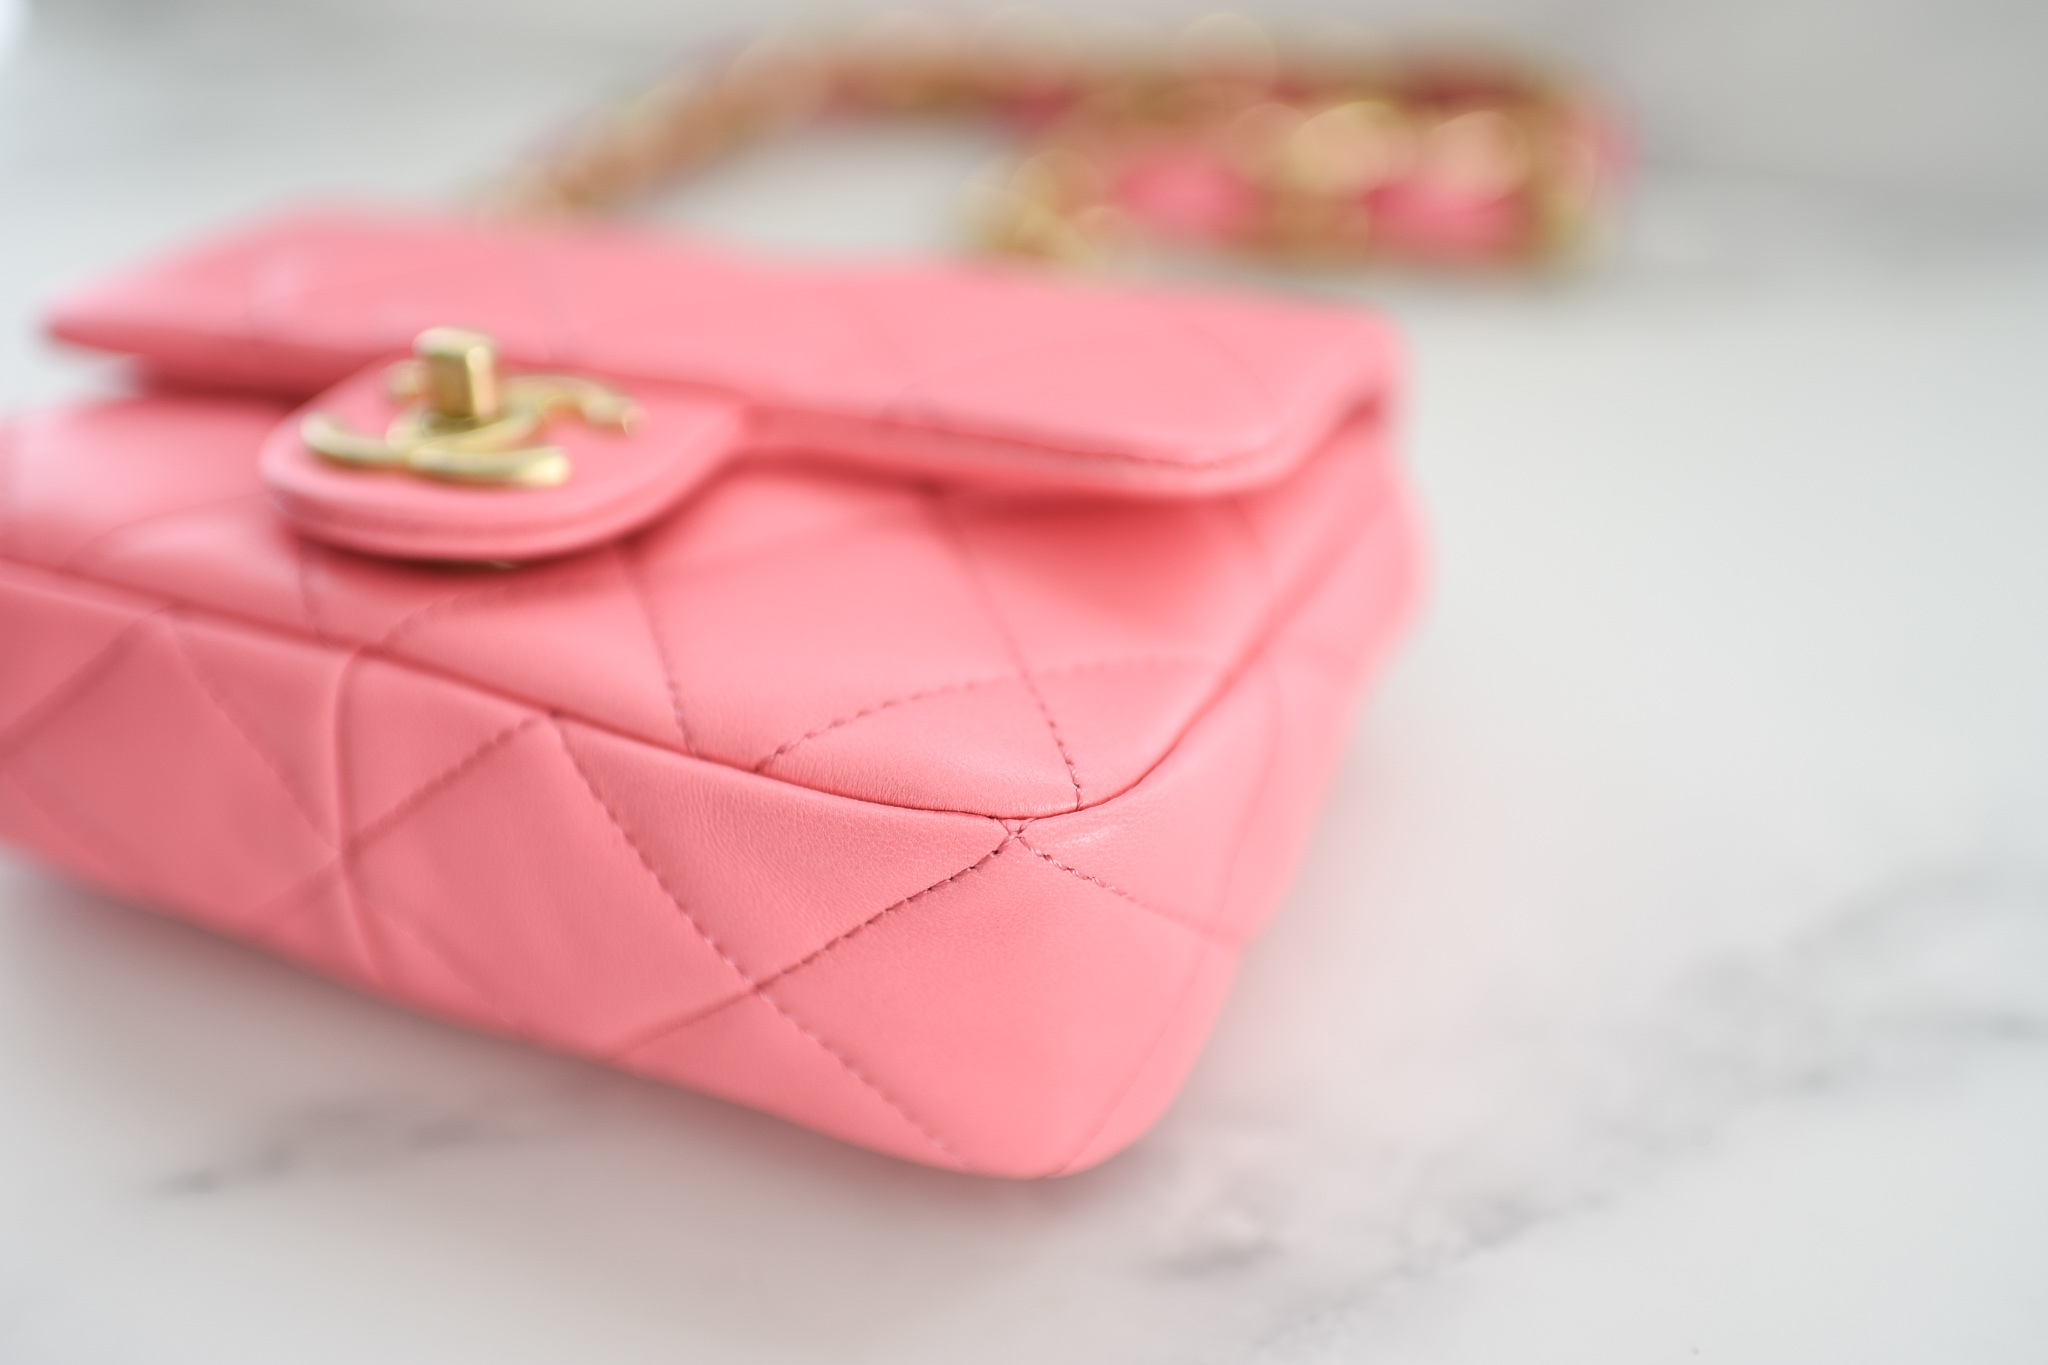 Chanel Seasonal Mini Flap, Funky Town 22S Pink, Gold Hardware, New in Box  GA001